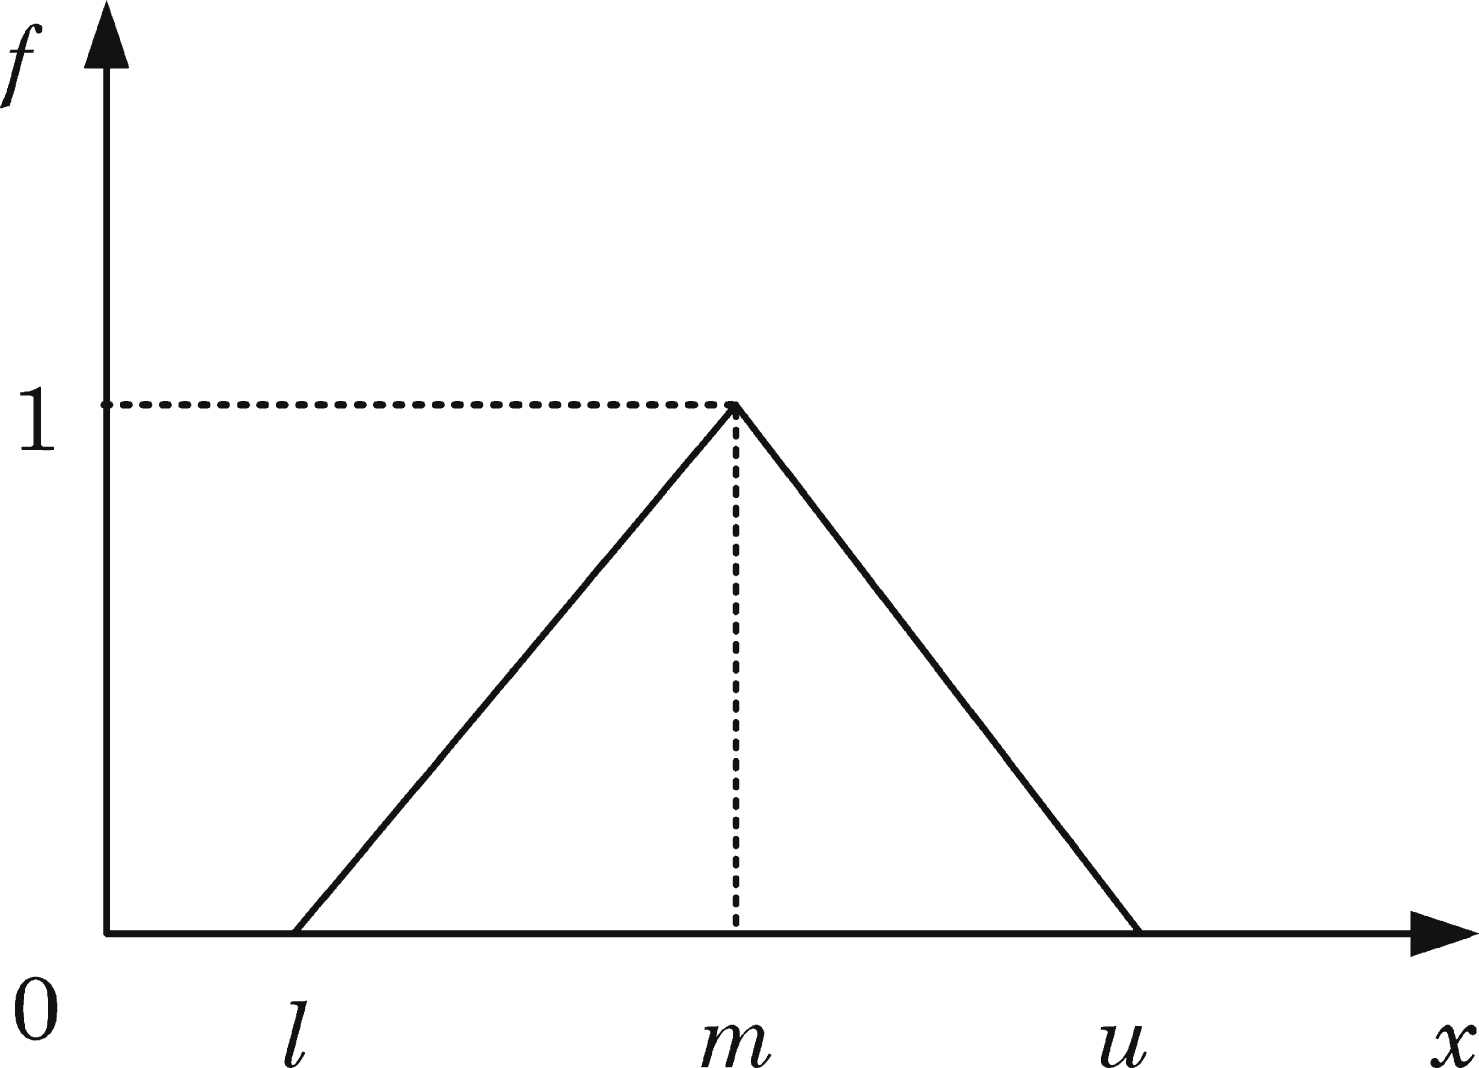 A triangular fuzzy number M.